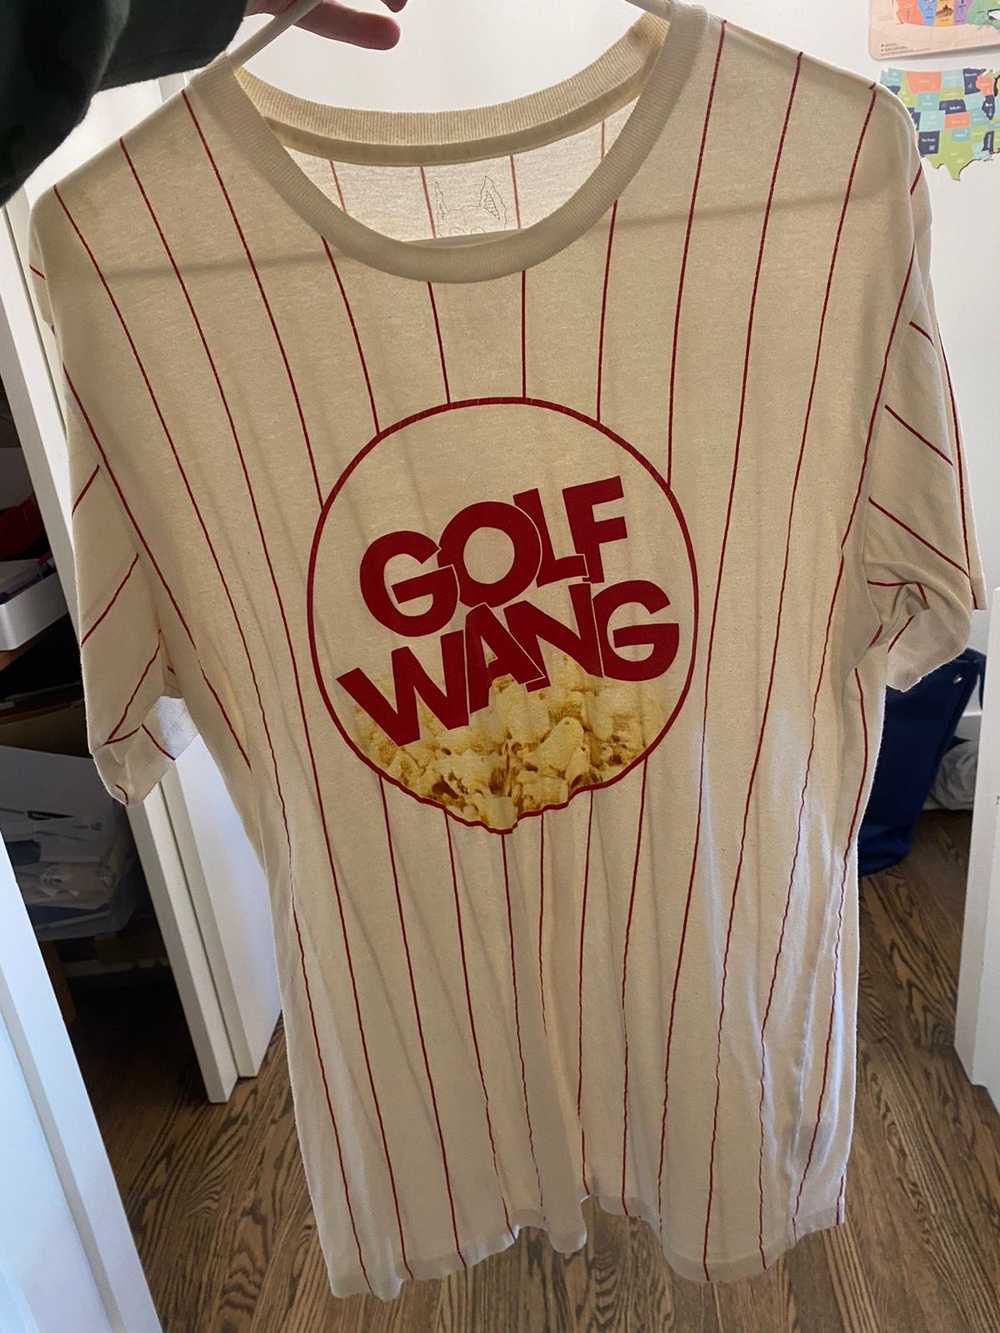 Golf Wang Golfwang popcorn tee - image 1